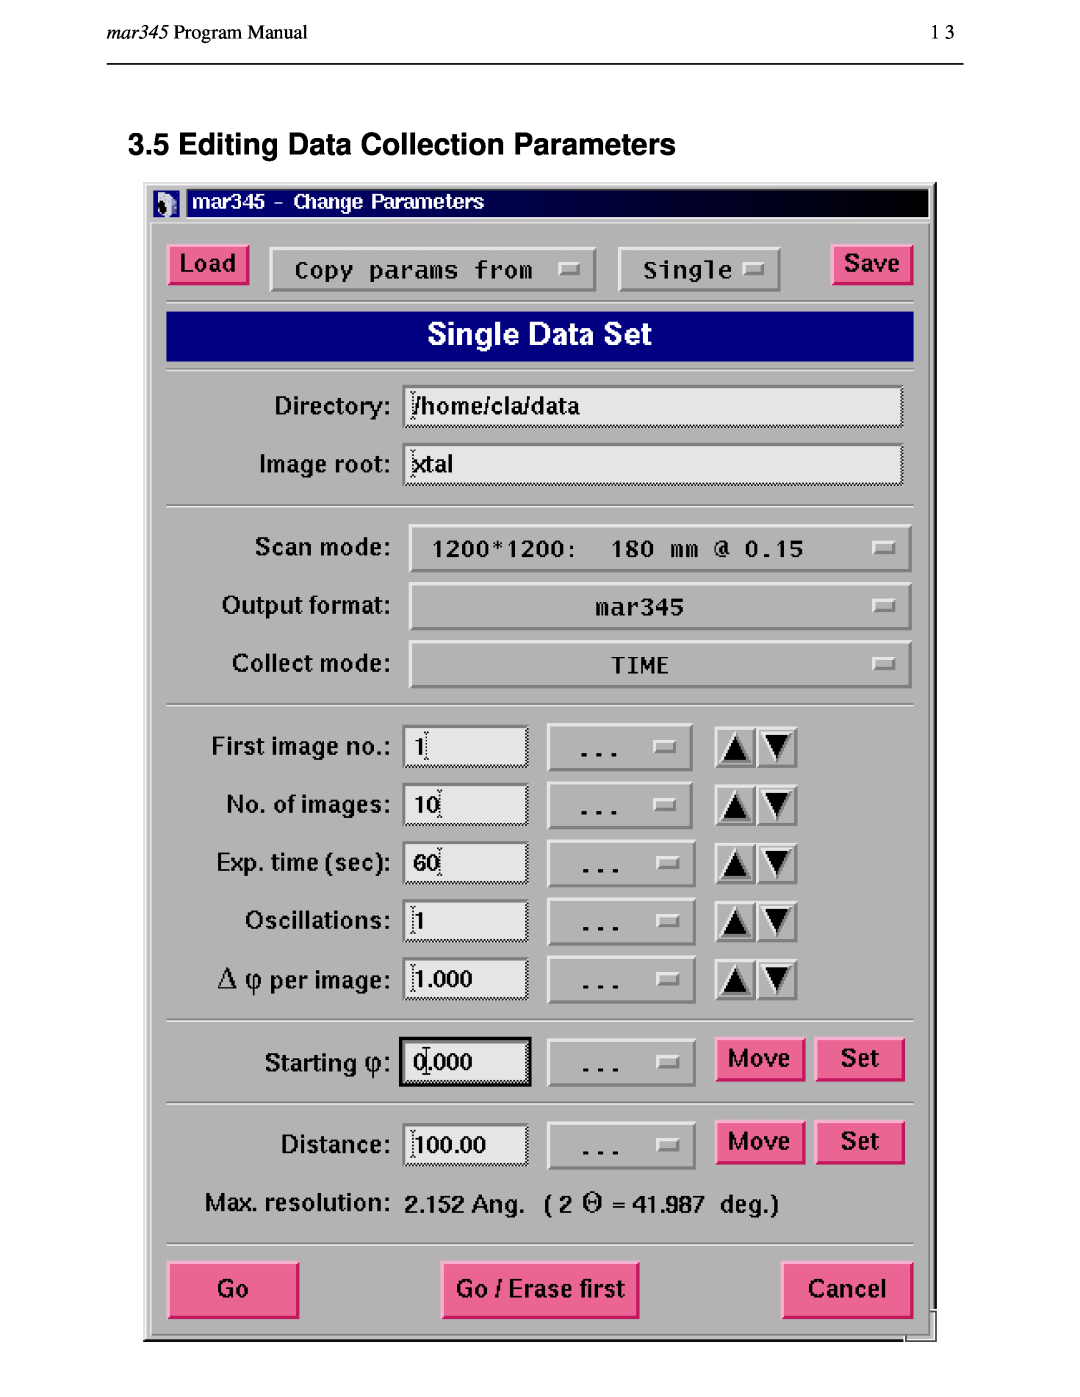 Compaq manual Editing Data Collection Parameters, mar345 Program Manual 